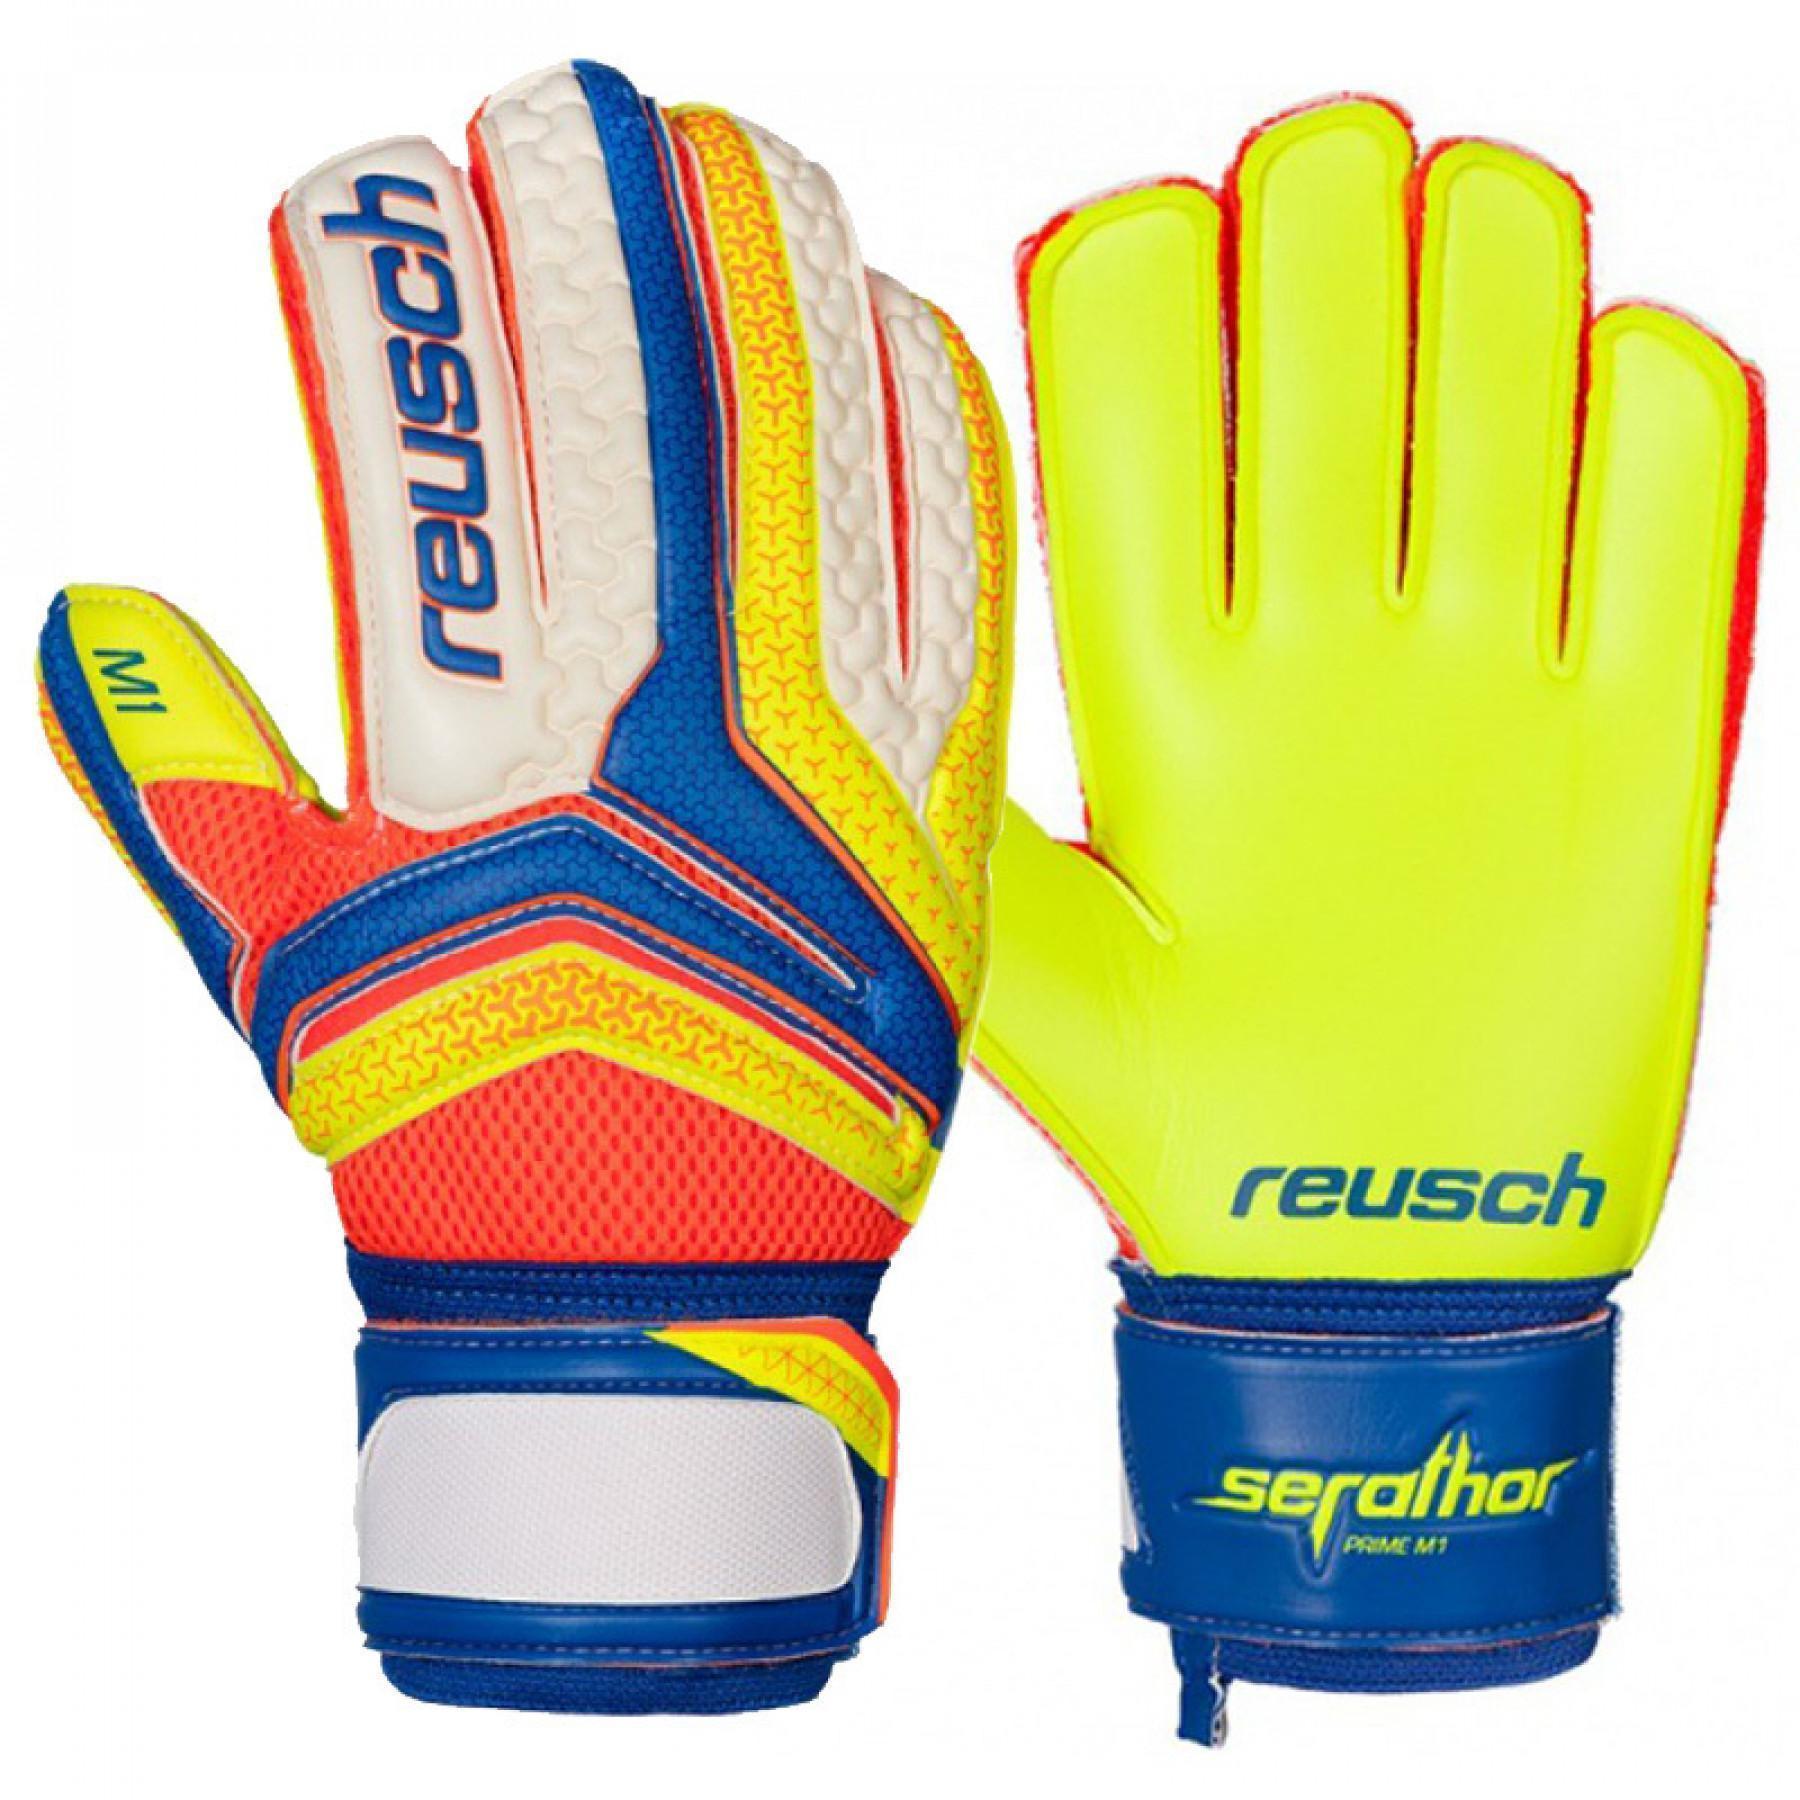 Goalkeeper gloves Reusch Serathor Prime M1 (2017)